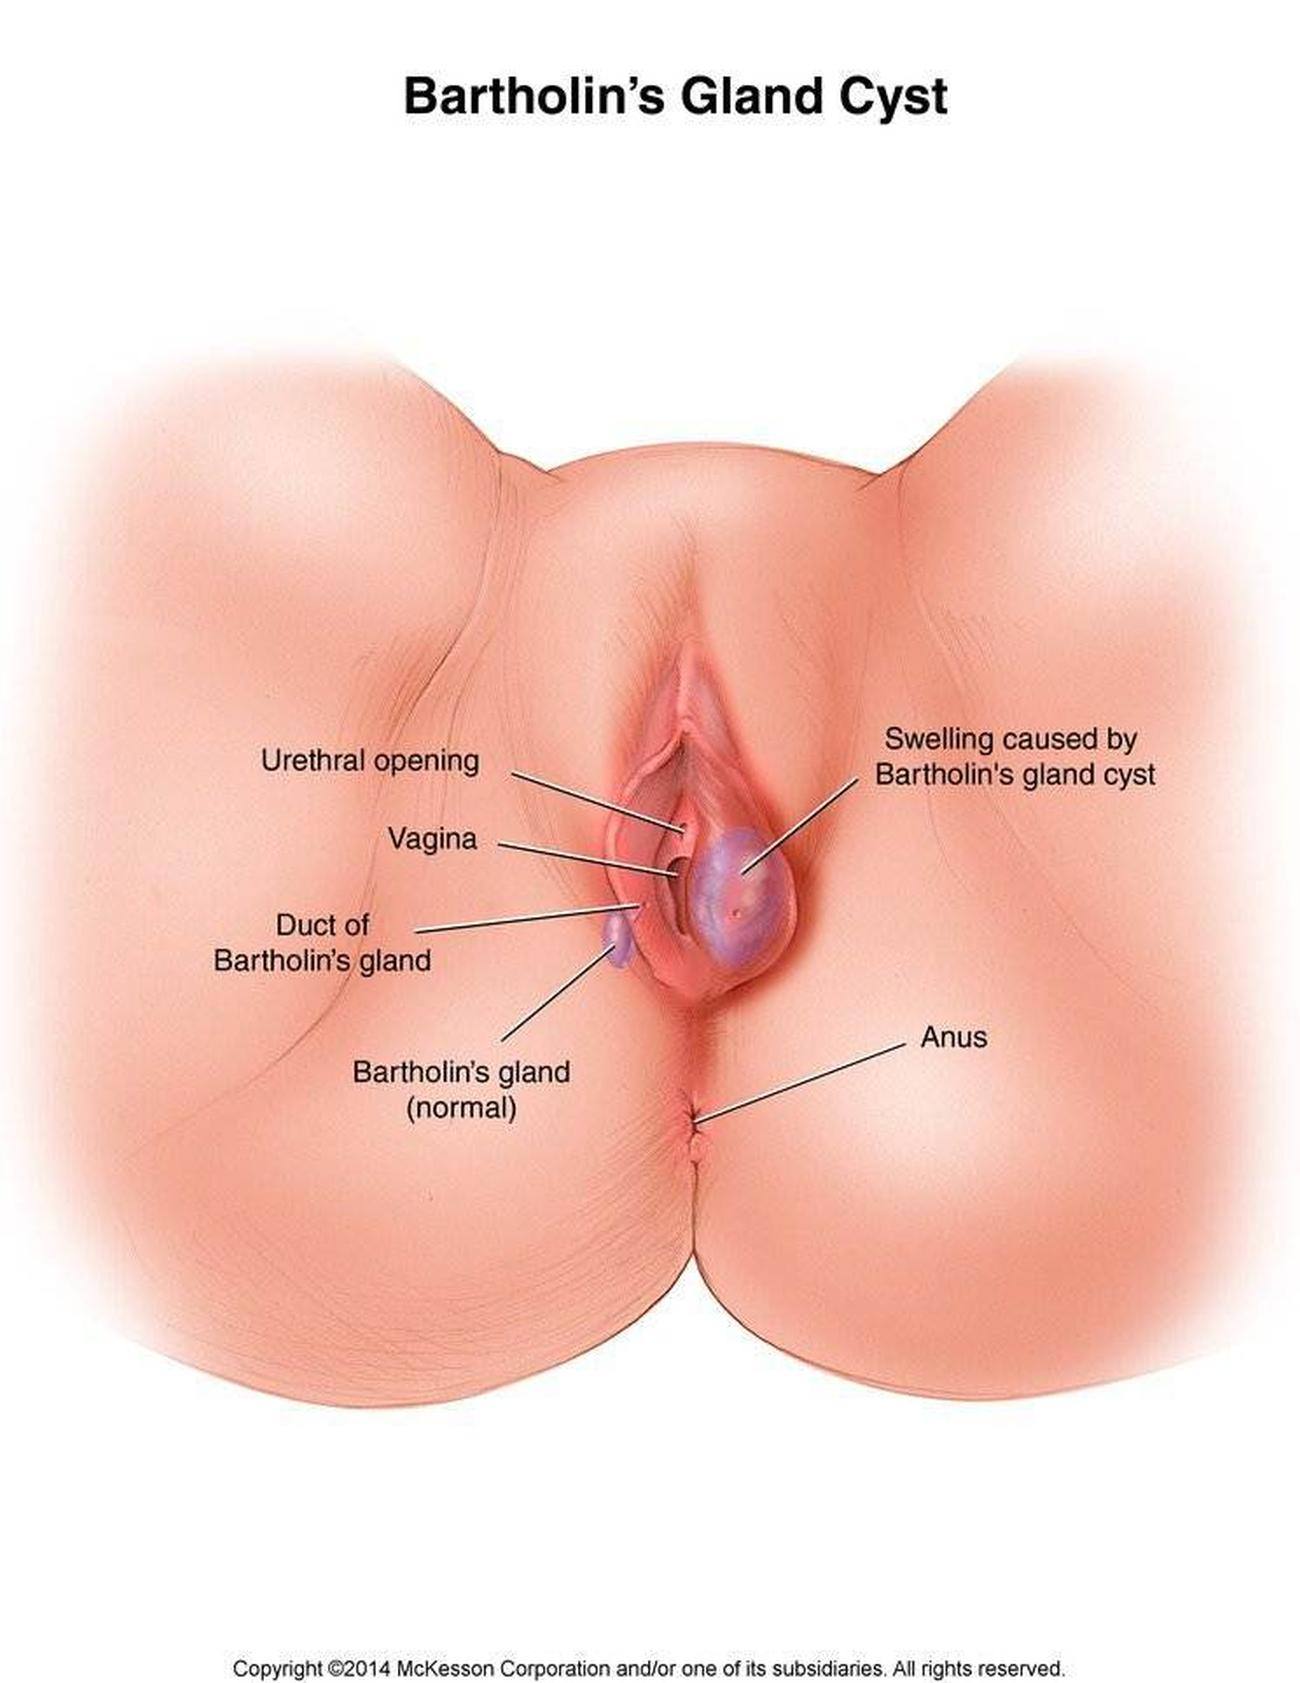 Vulva pustule treatment